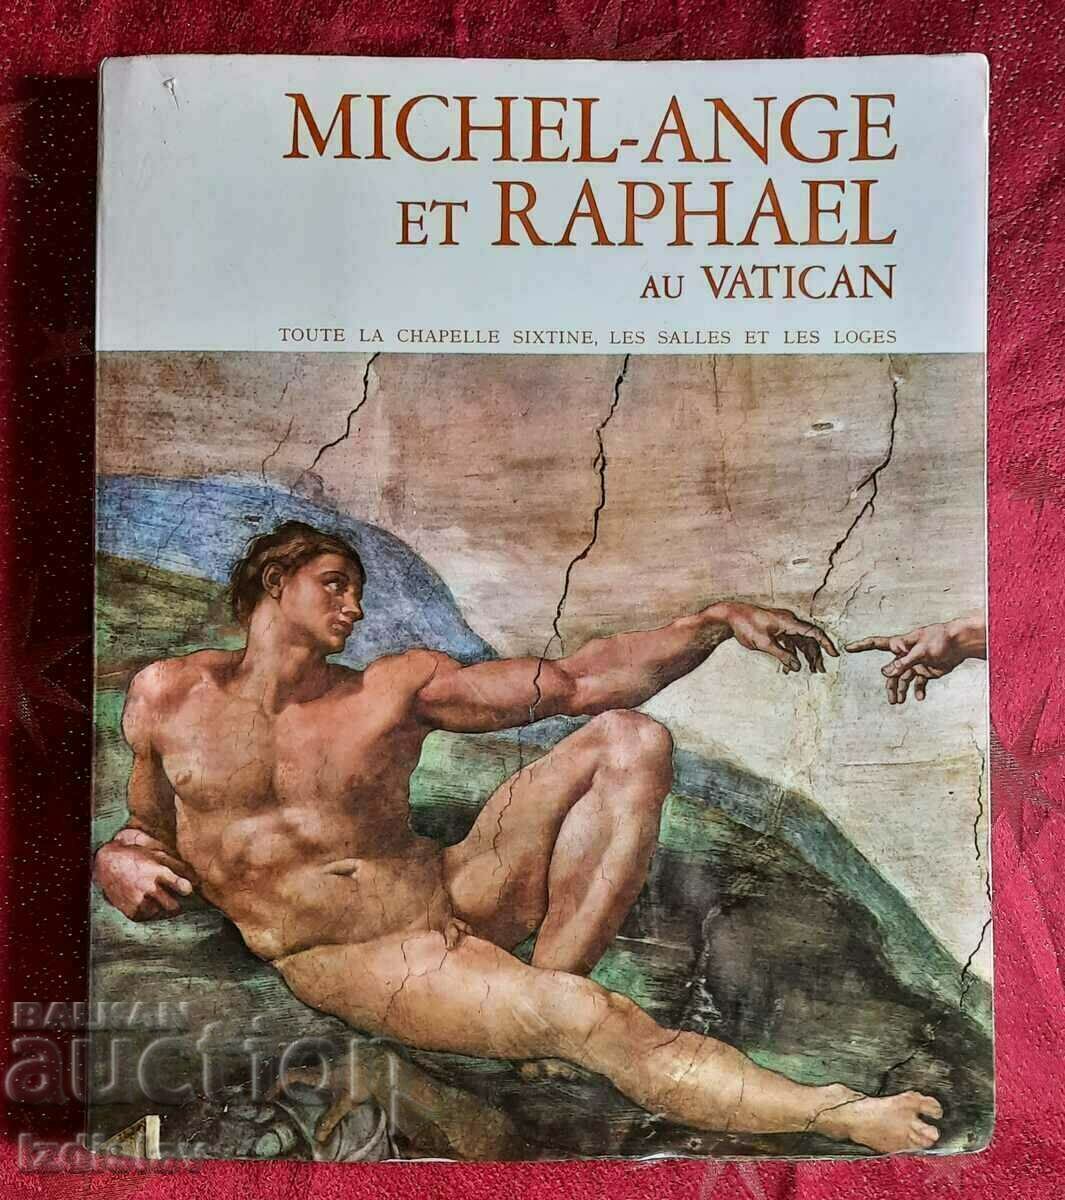 Luxury album for Michelangelo and Raphael